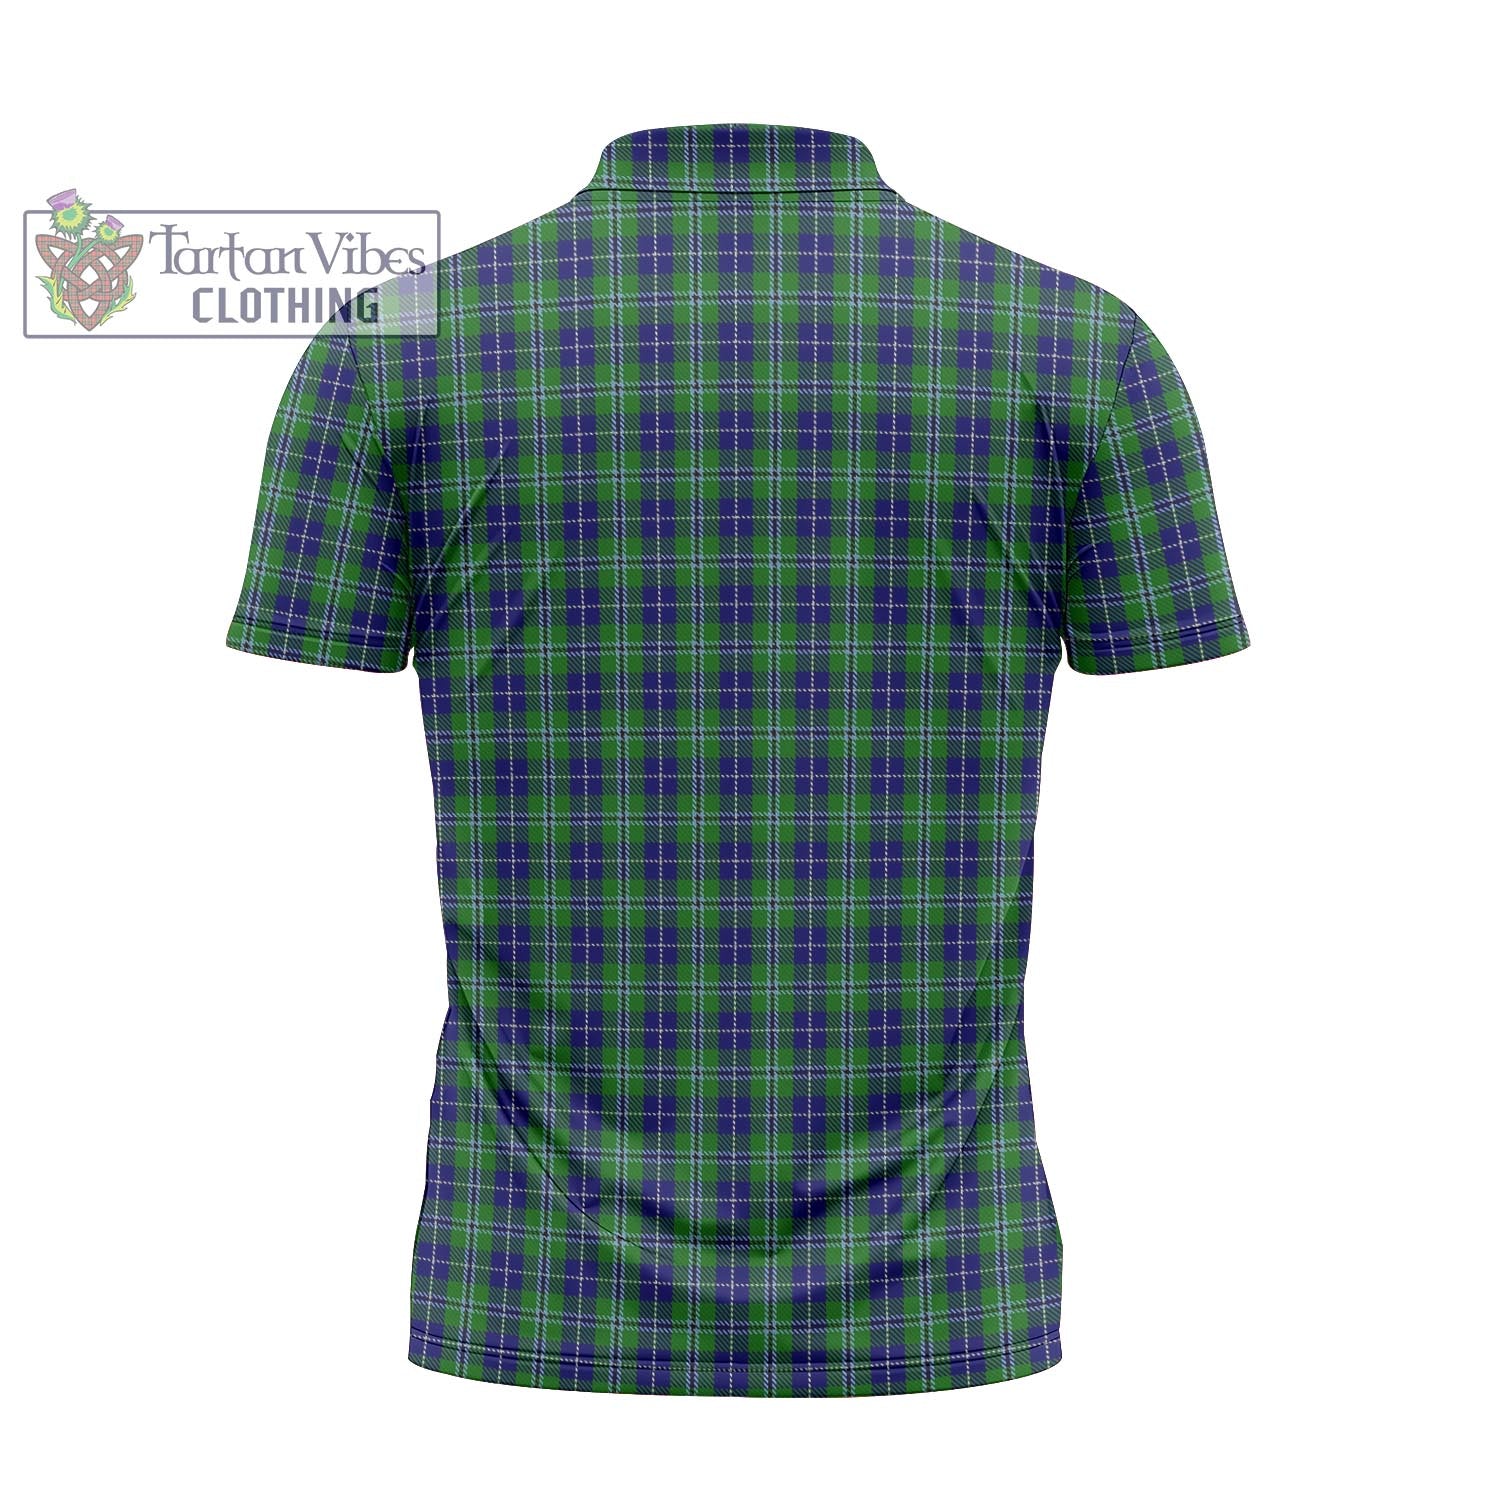 Tartan Vibes Clothing Douglas Tartan Zipper Polo Shirt with Family Crest